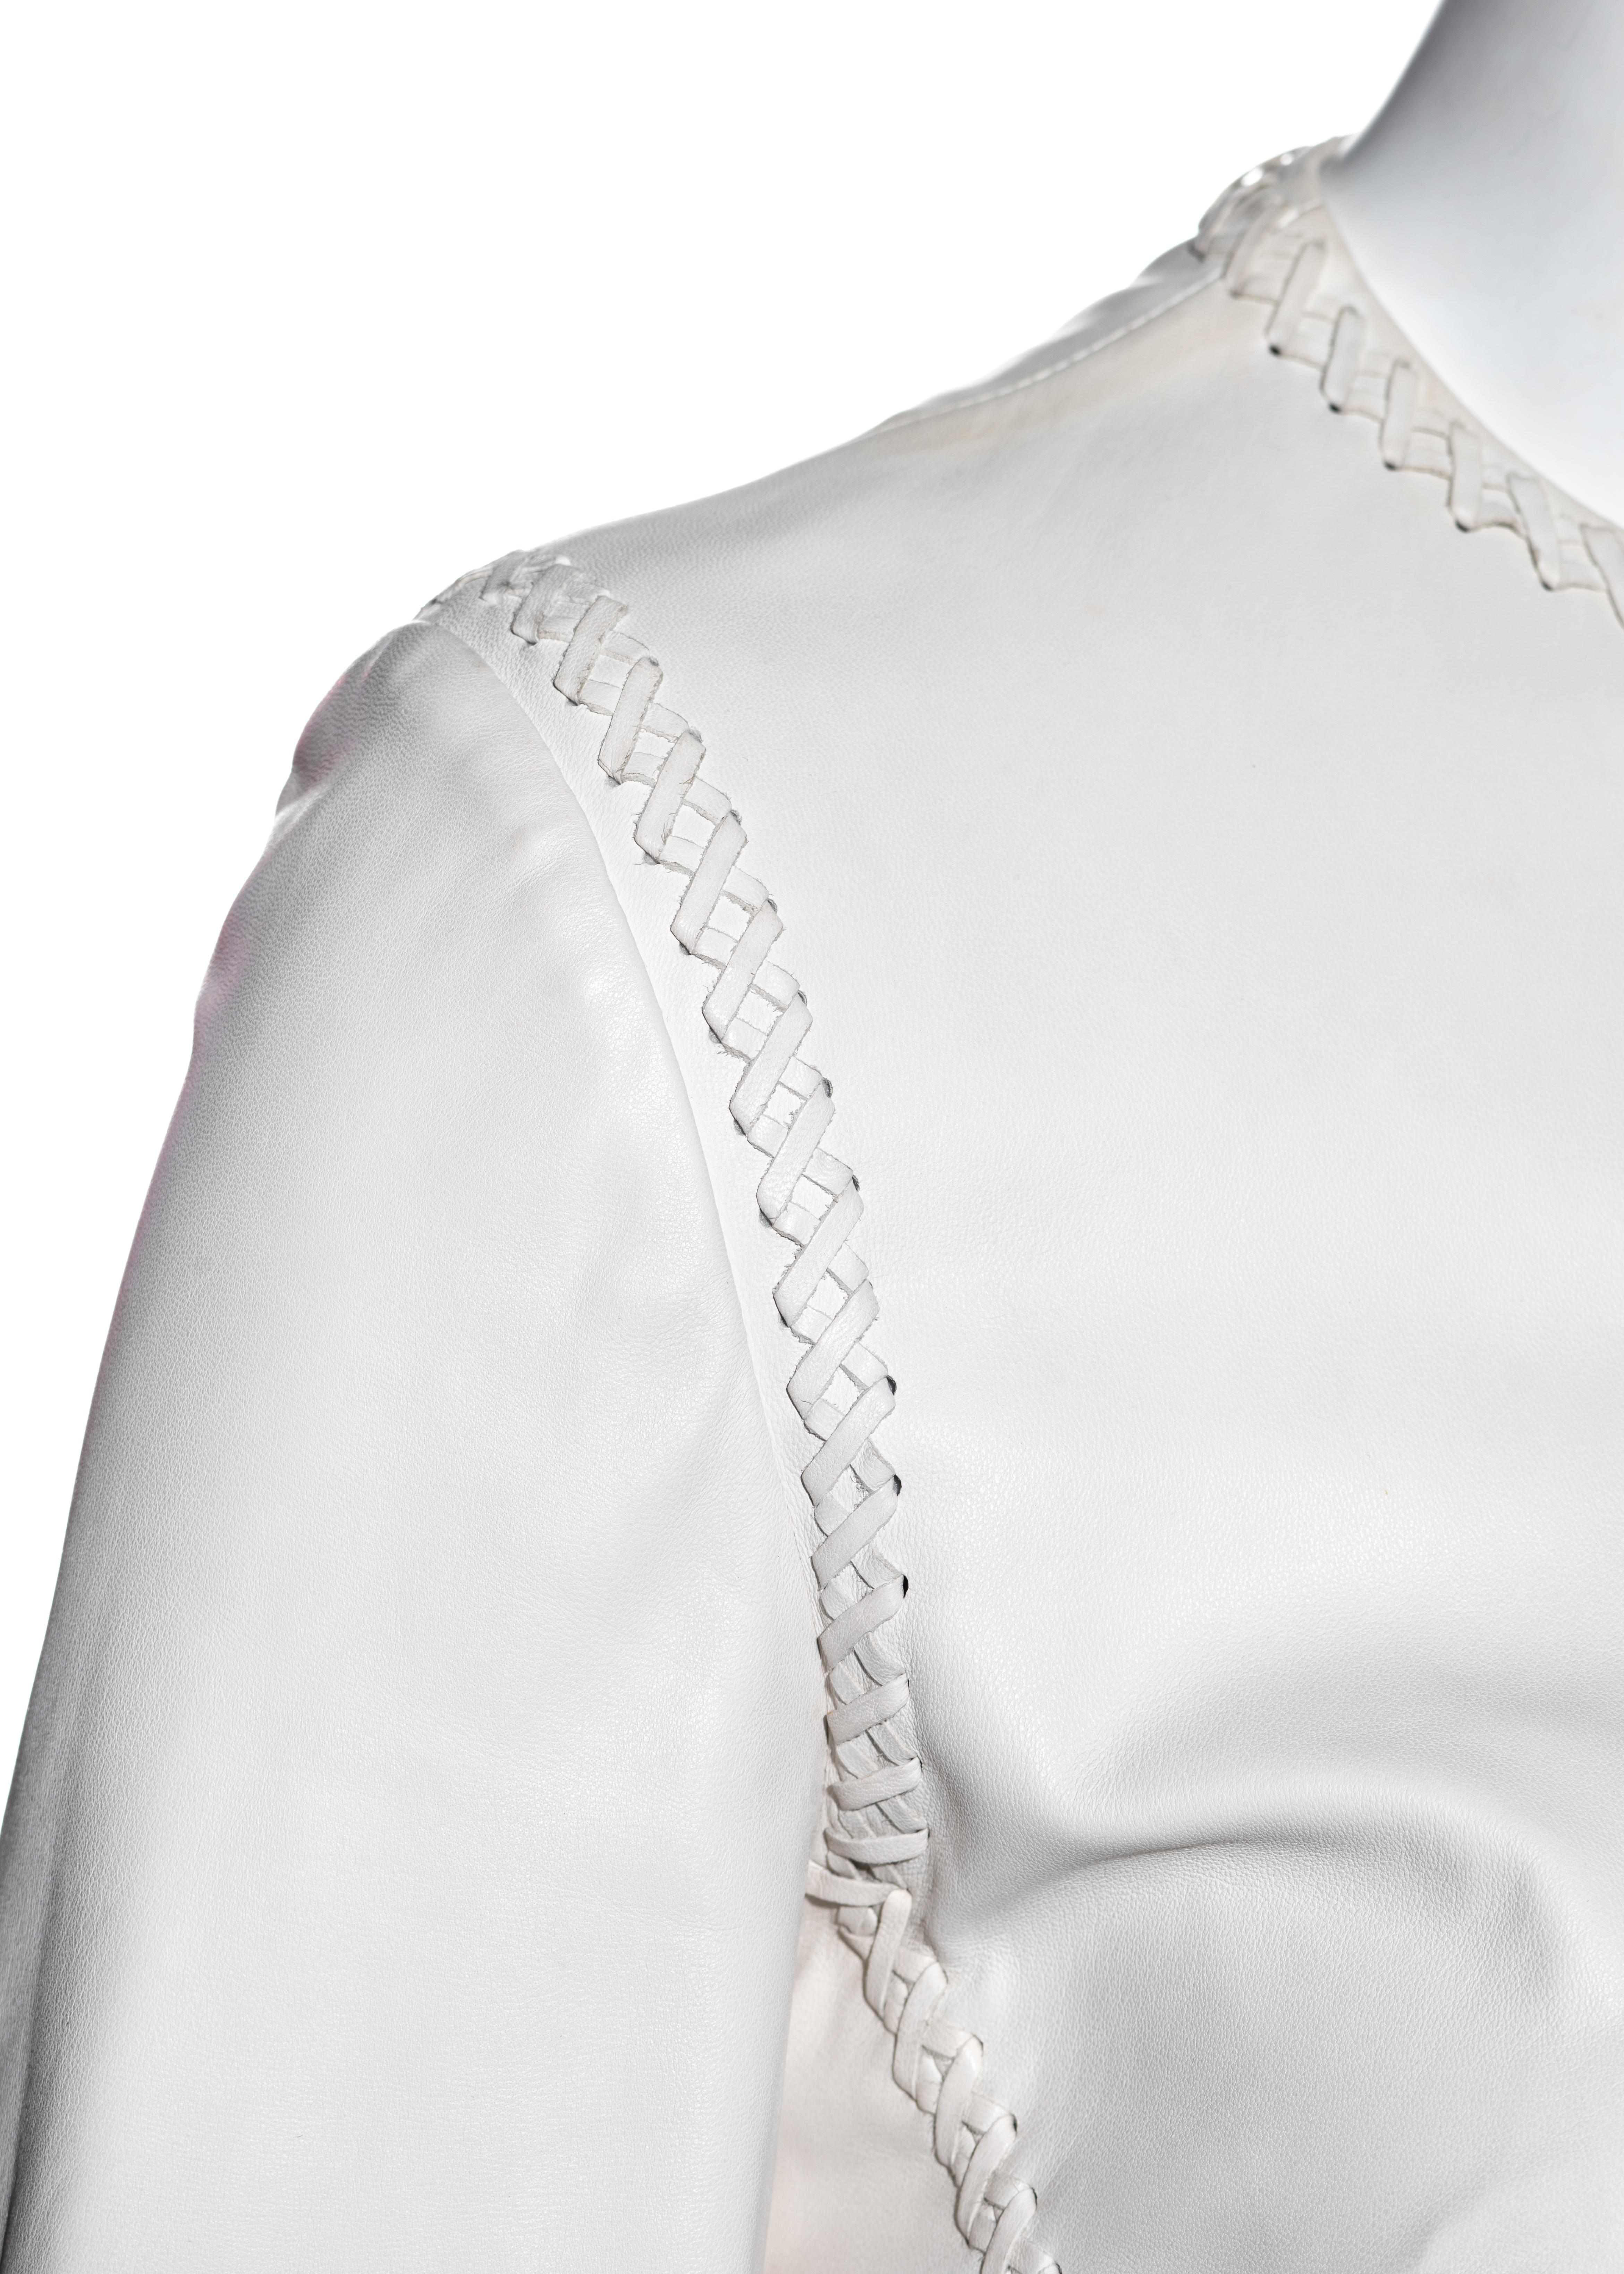 Gianni Versace white leather backless lace up fringed jacket, ss 2002 1